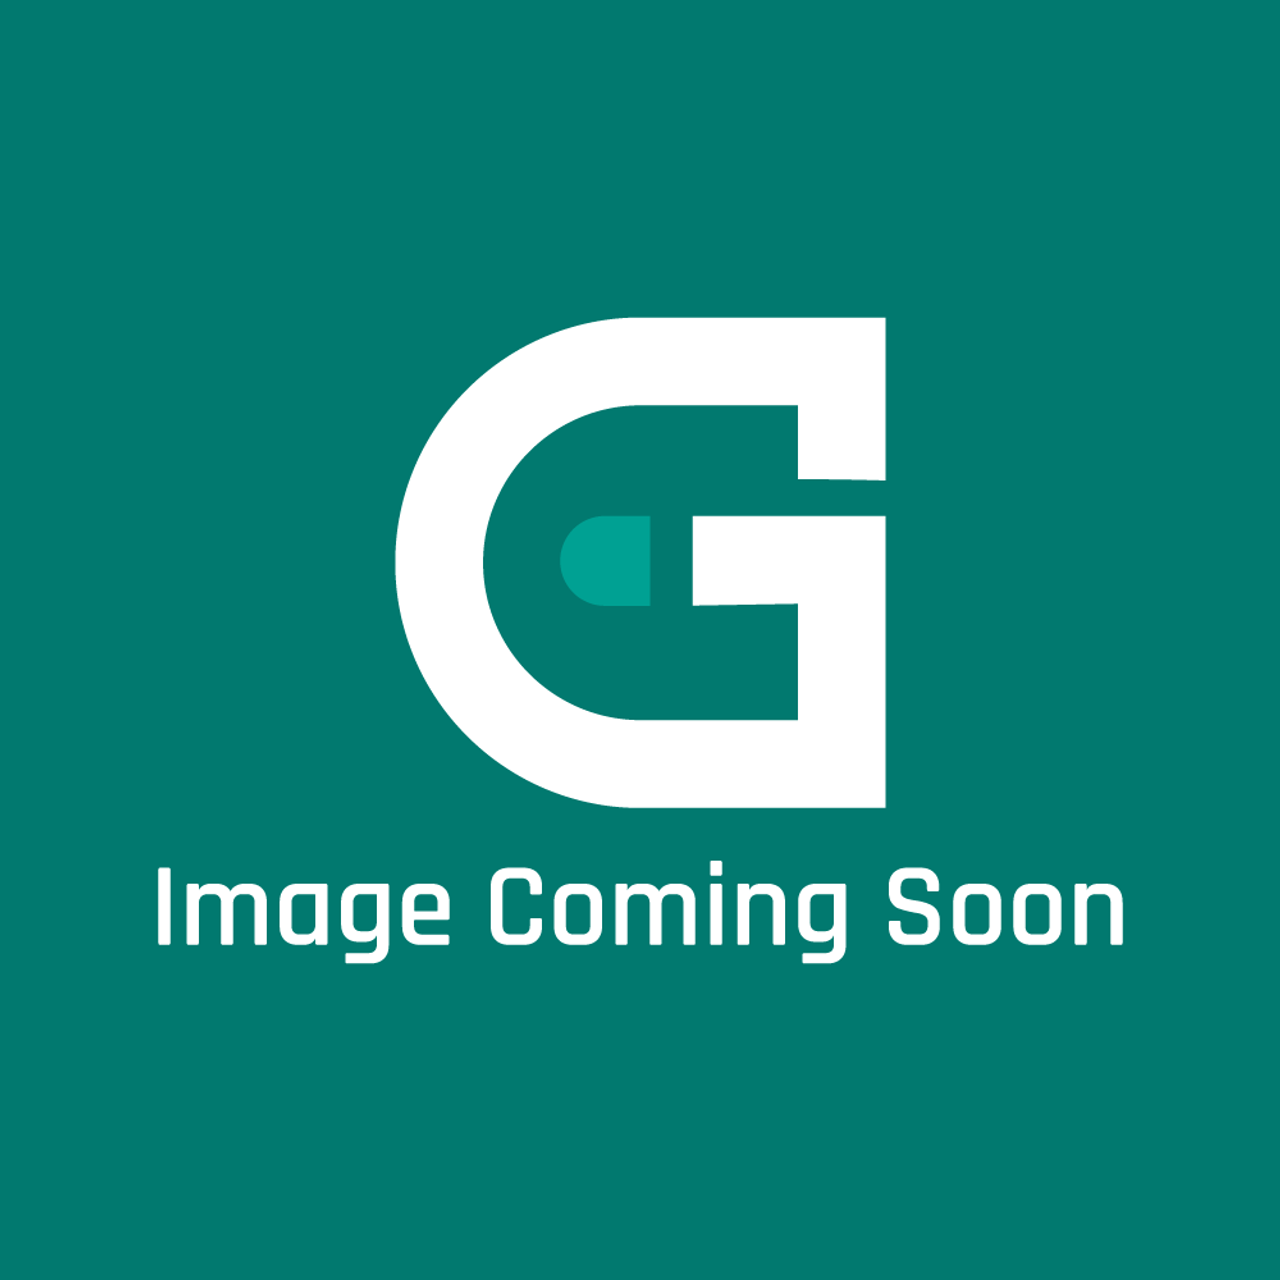 GE Appliances WD21X10411 - Switch Rocker - Image Coming Soon!